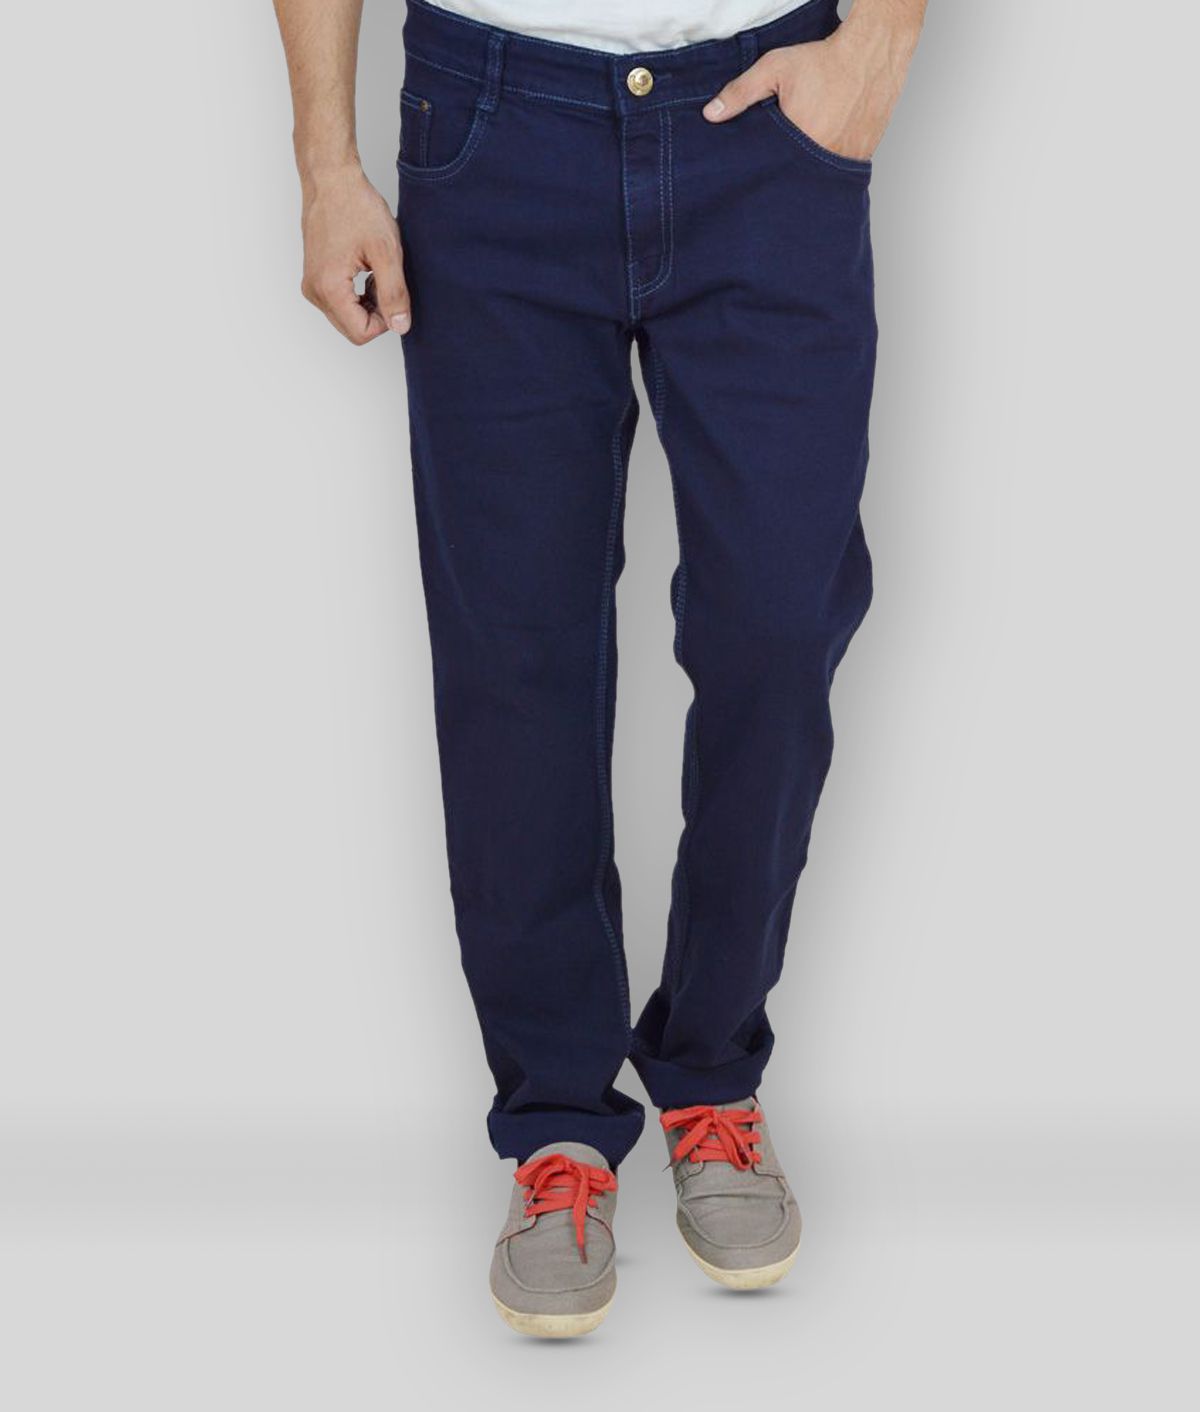 Studio Nexx - Navy Blue 100% Cotton Regular Fit Men's Jeans ( Pack of 1 )